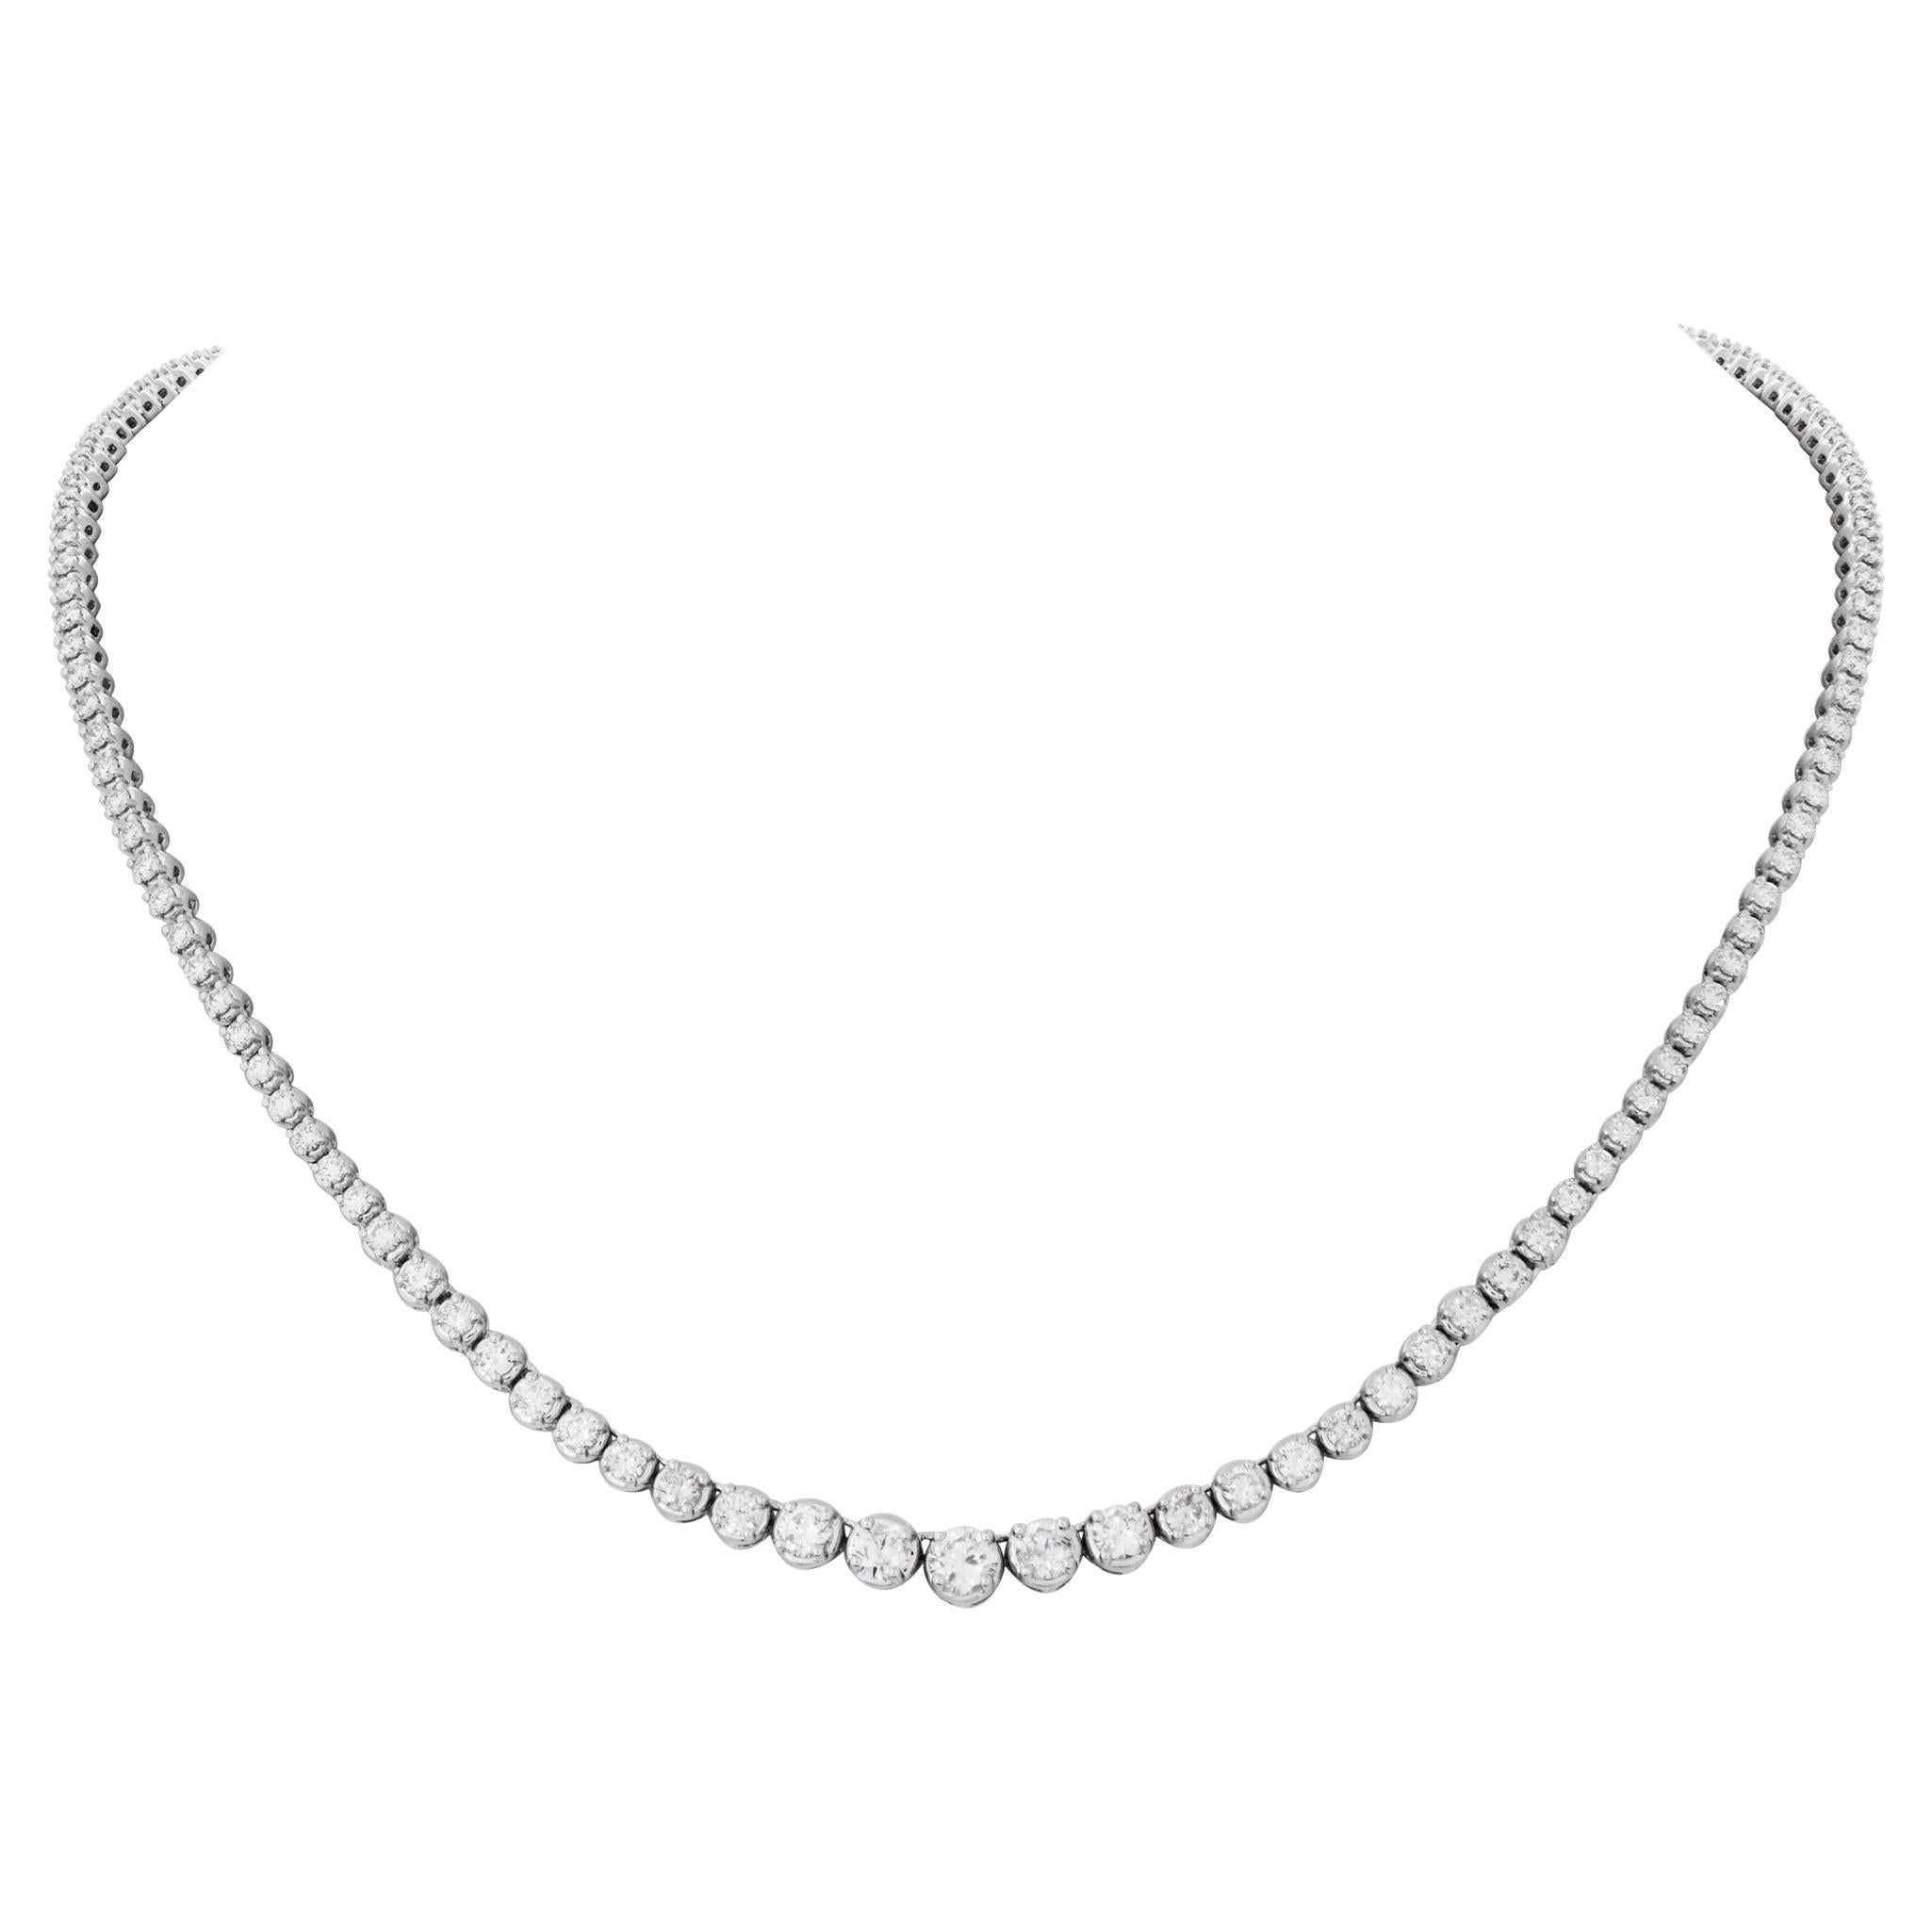 Graduated diamonds line necklace in 18k white gold